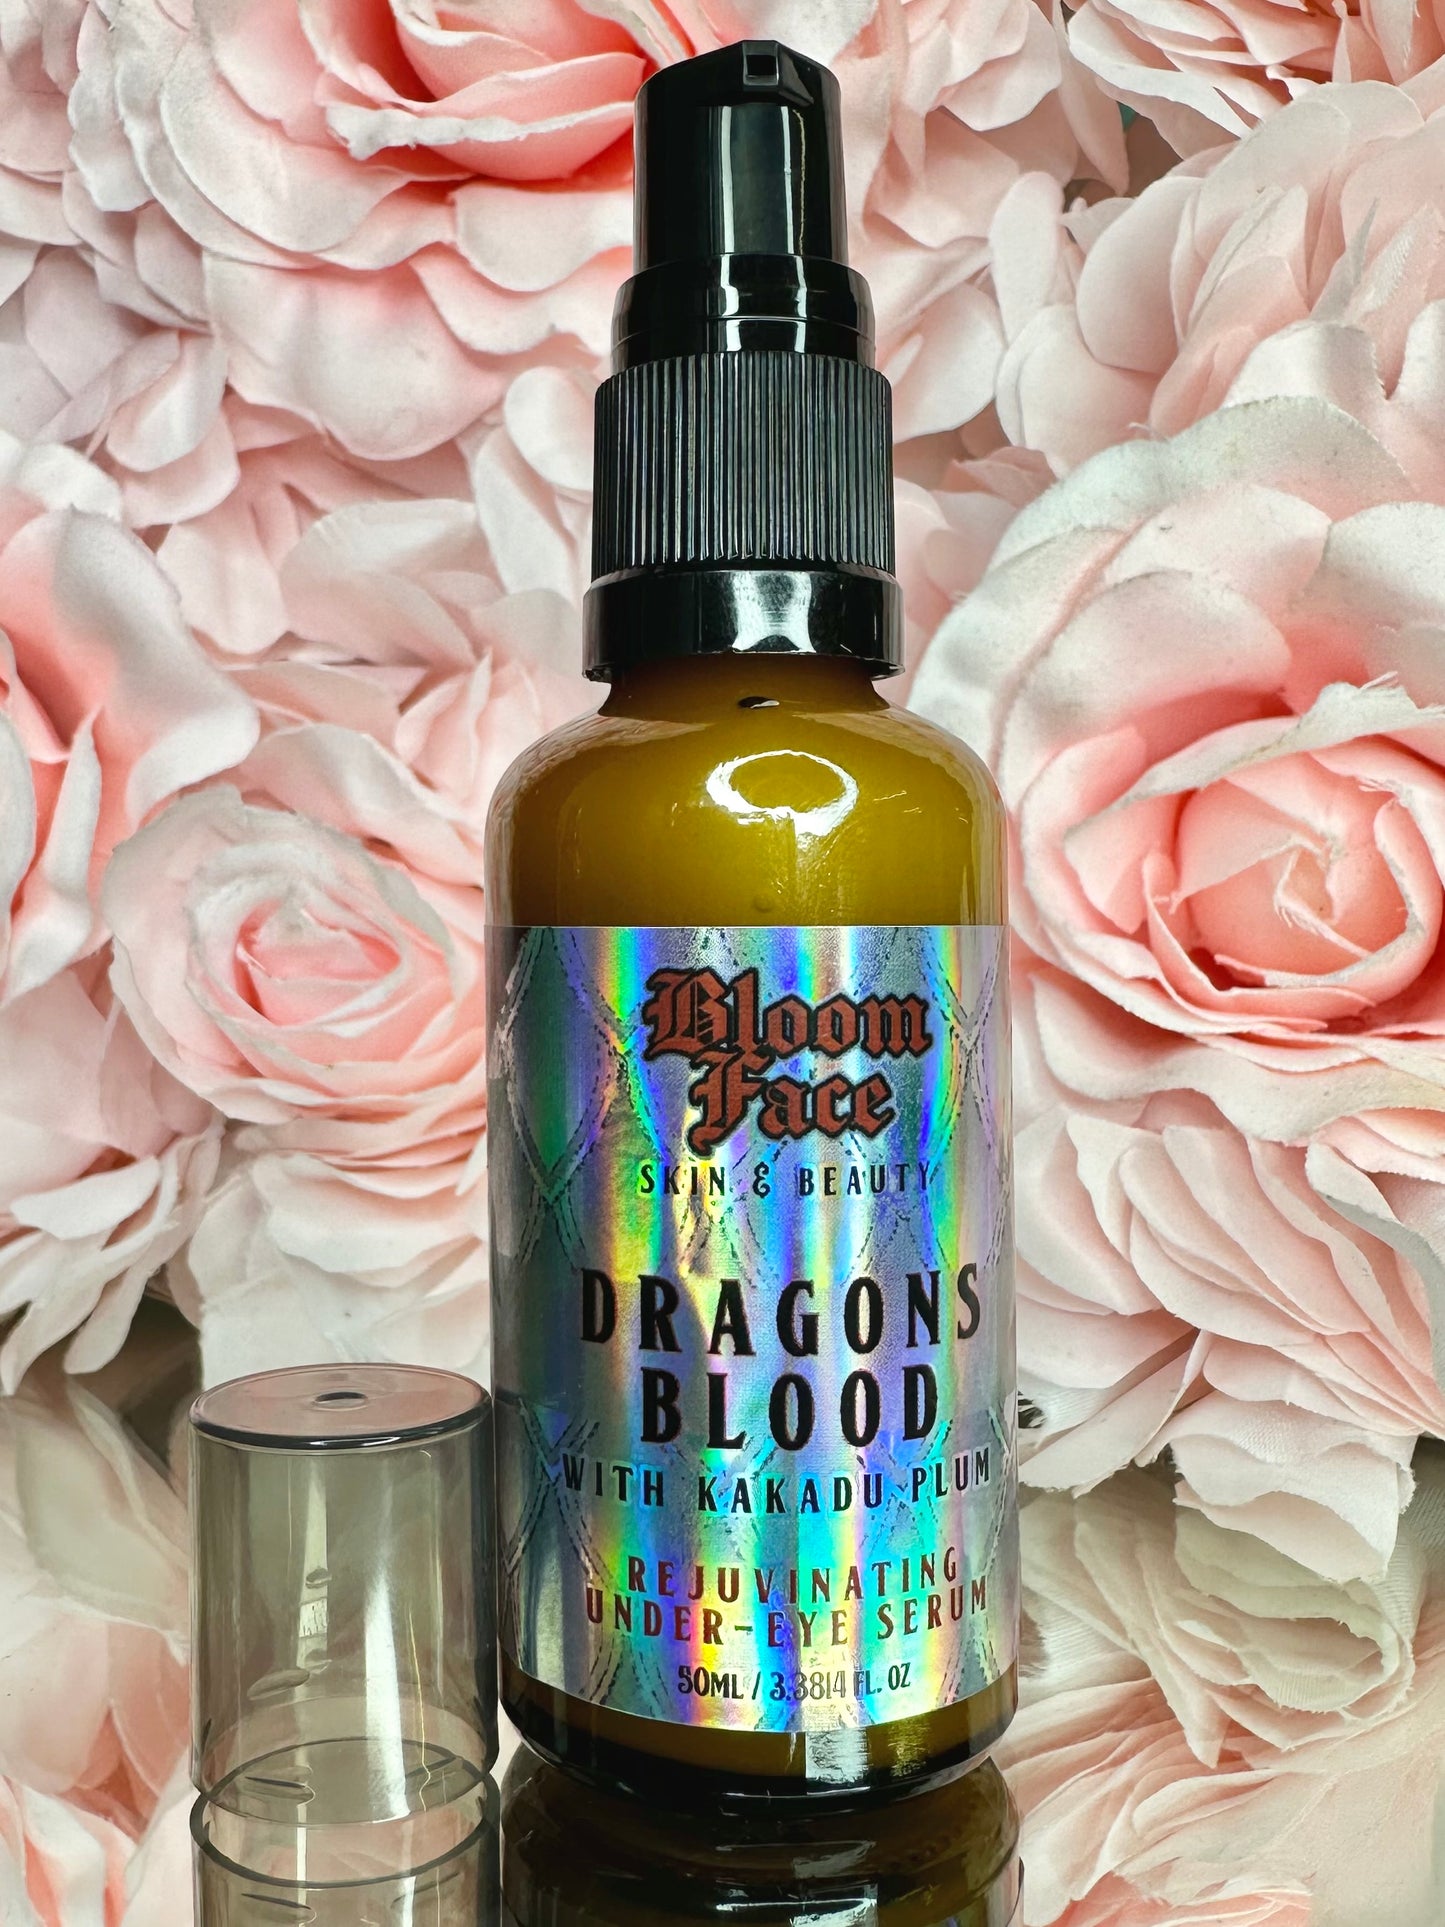 DRAGONS BLOOD - Undereye Gel with Kakadu plum